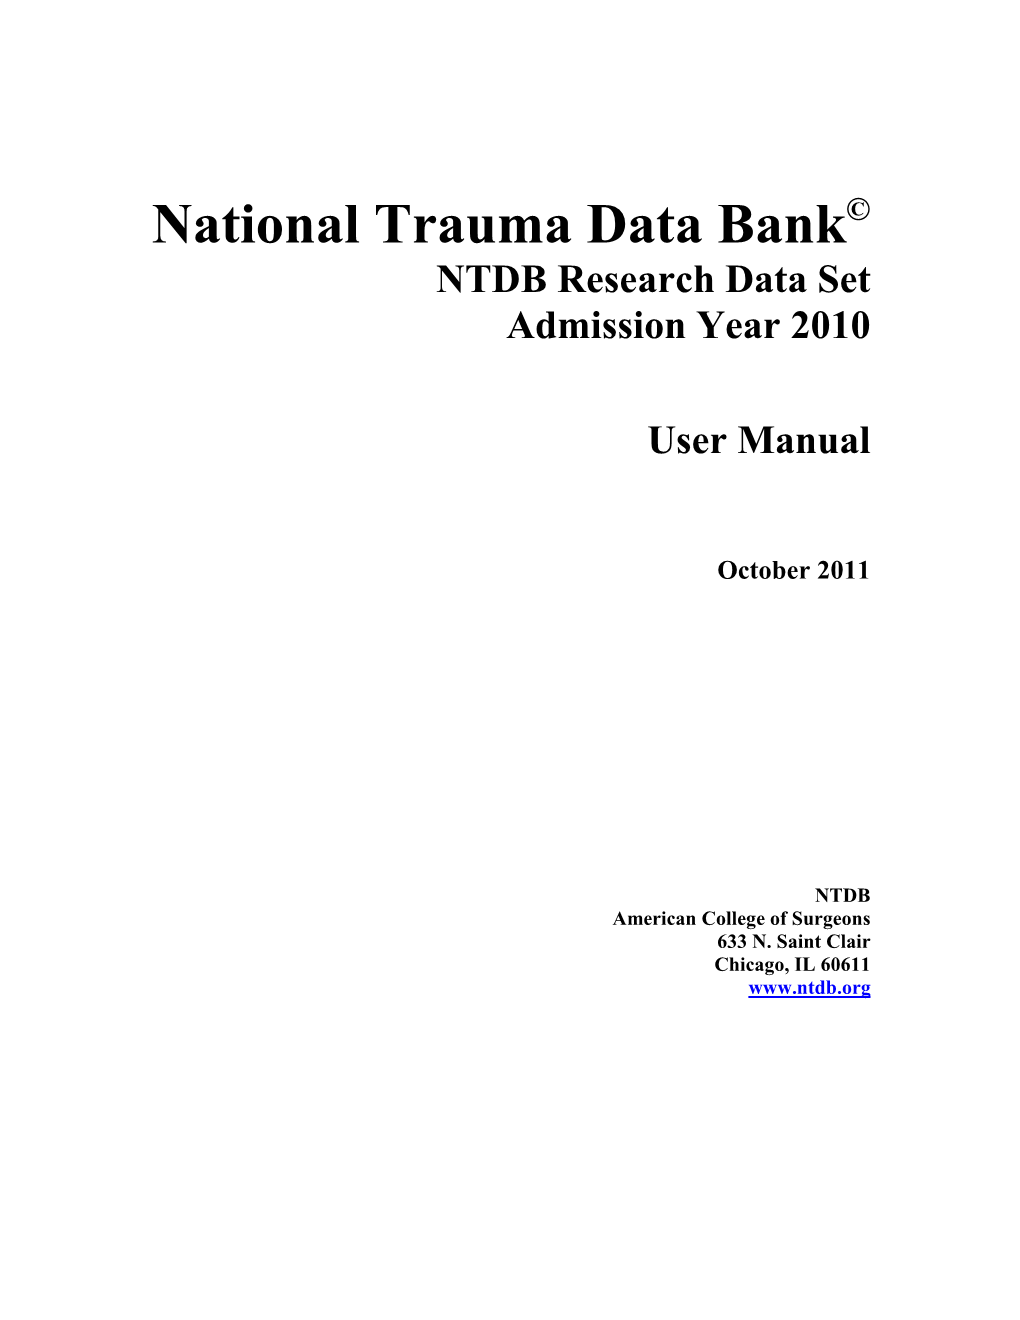 National Trauma Data Bank© NTDB Research Data Set Admission Year 2010